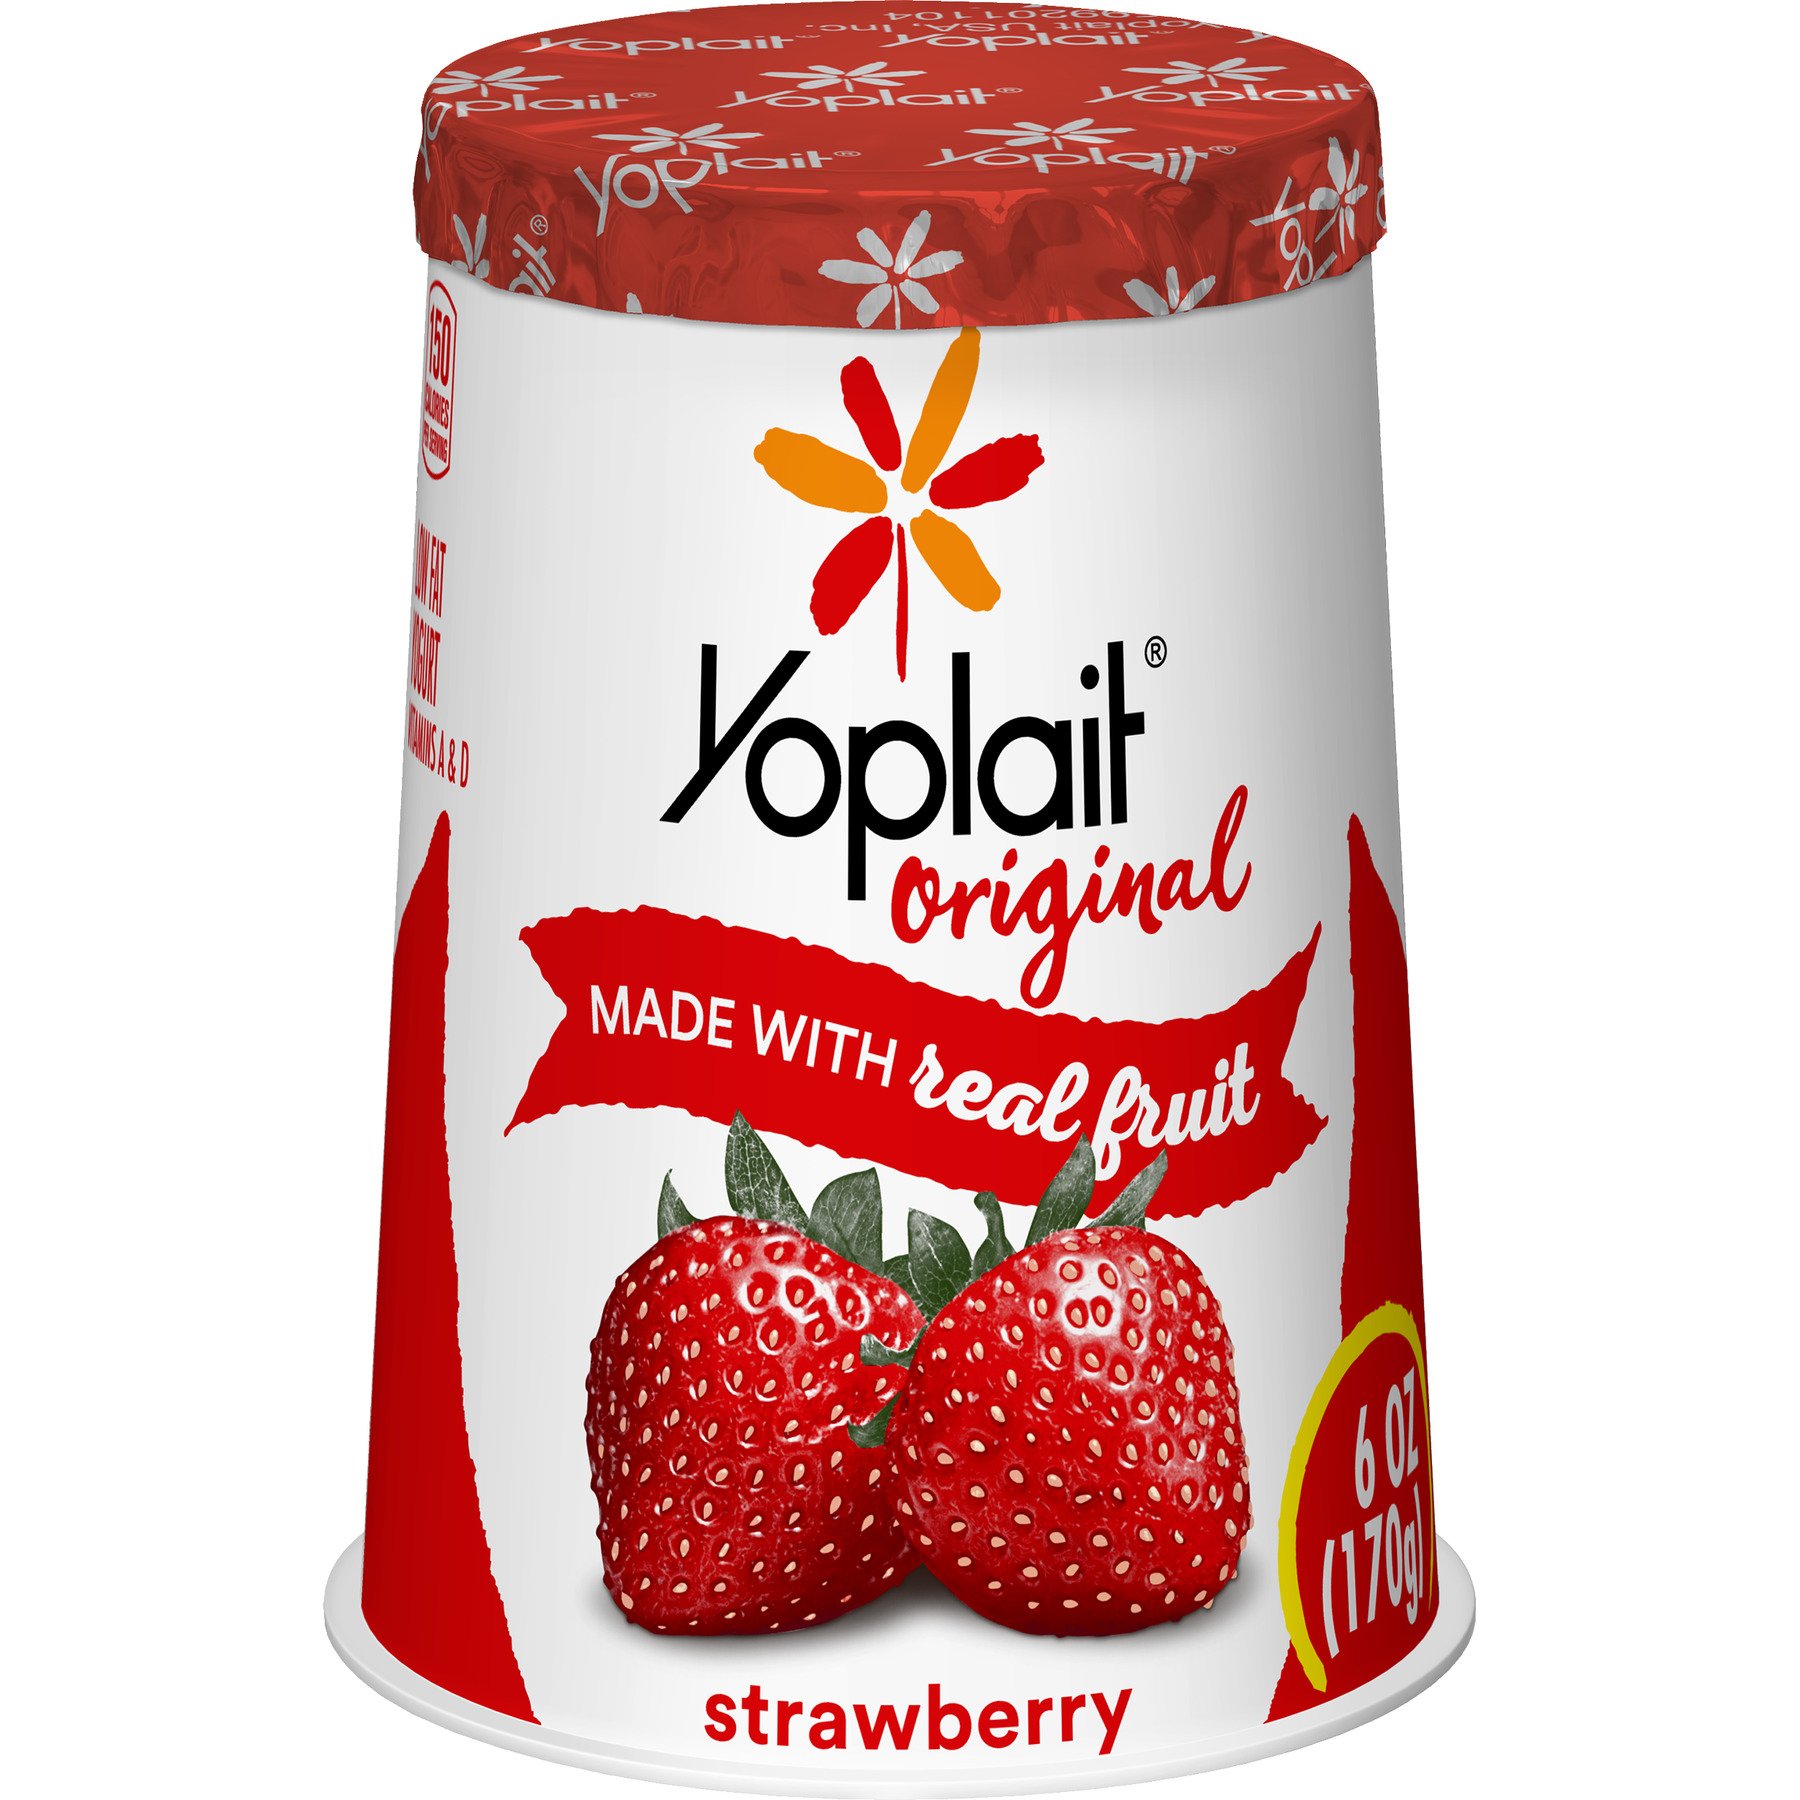 Yoplait Original Yogurt, Strawberry, Gluten Free, 6 oz ...